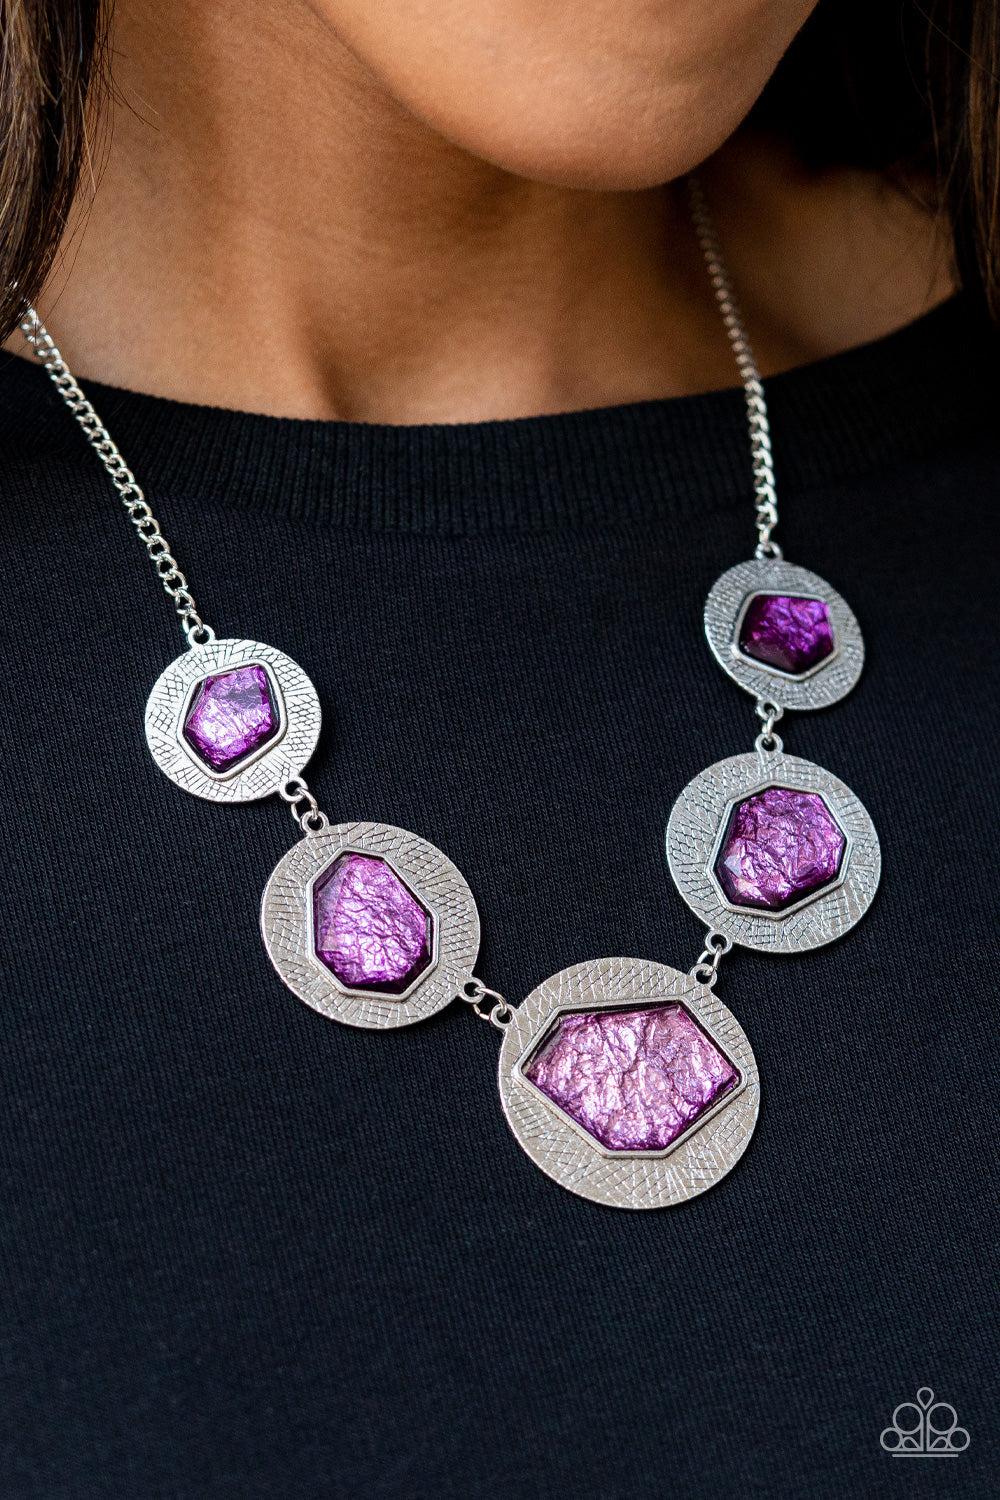 Raw Charisma Purple Gem Necklace - Paparazzi Accessories-on model - CarasShop.com - $5 Jewelry by Cara Jewels